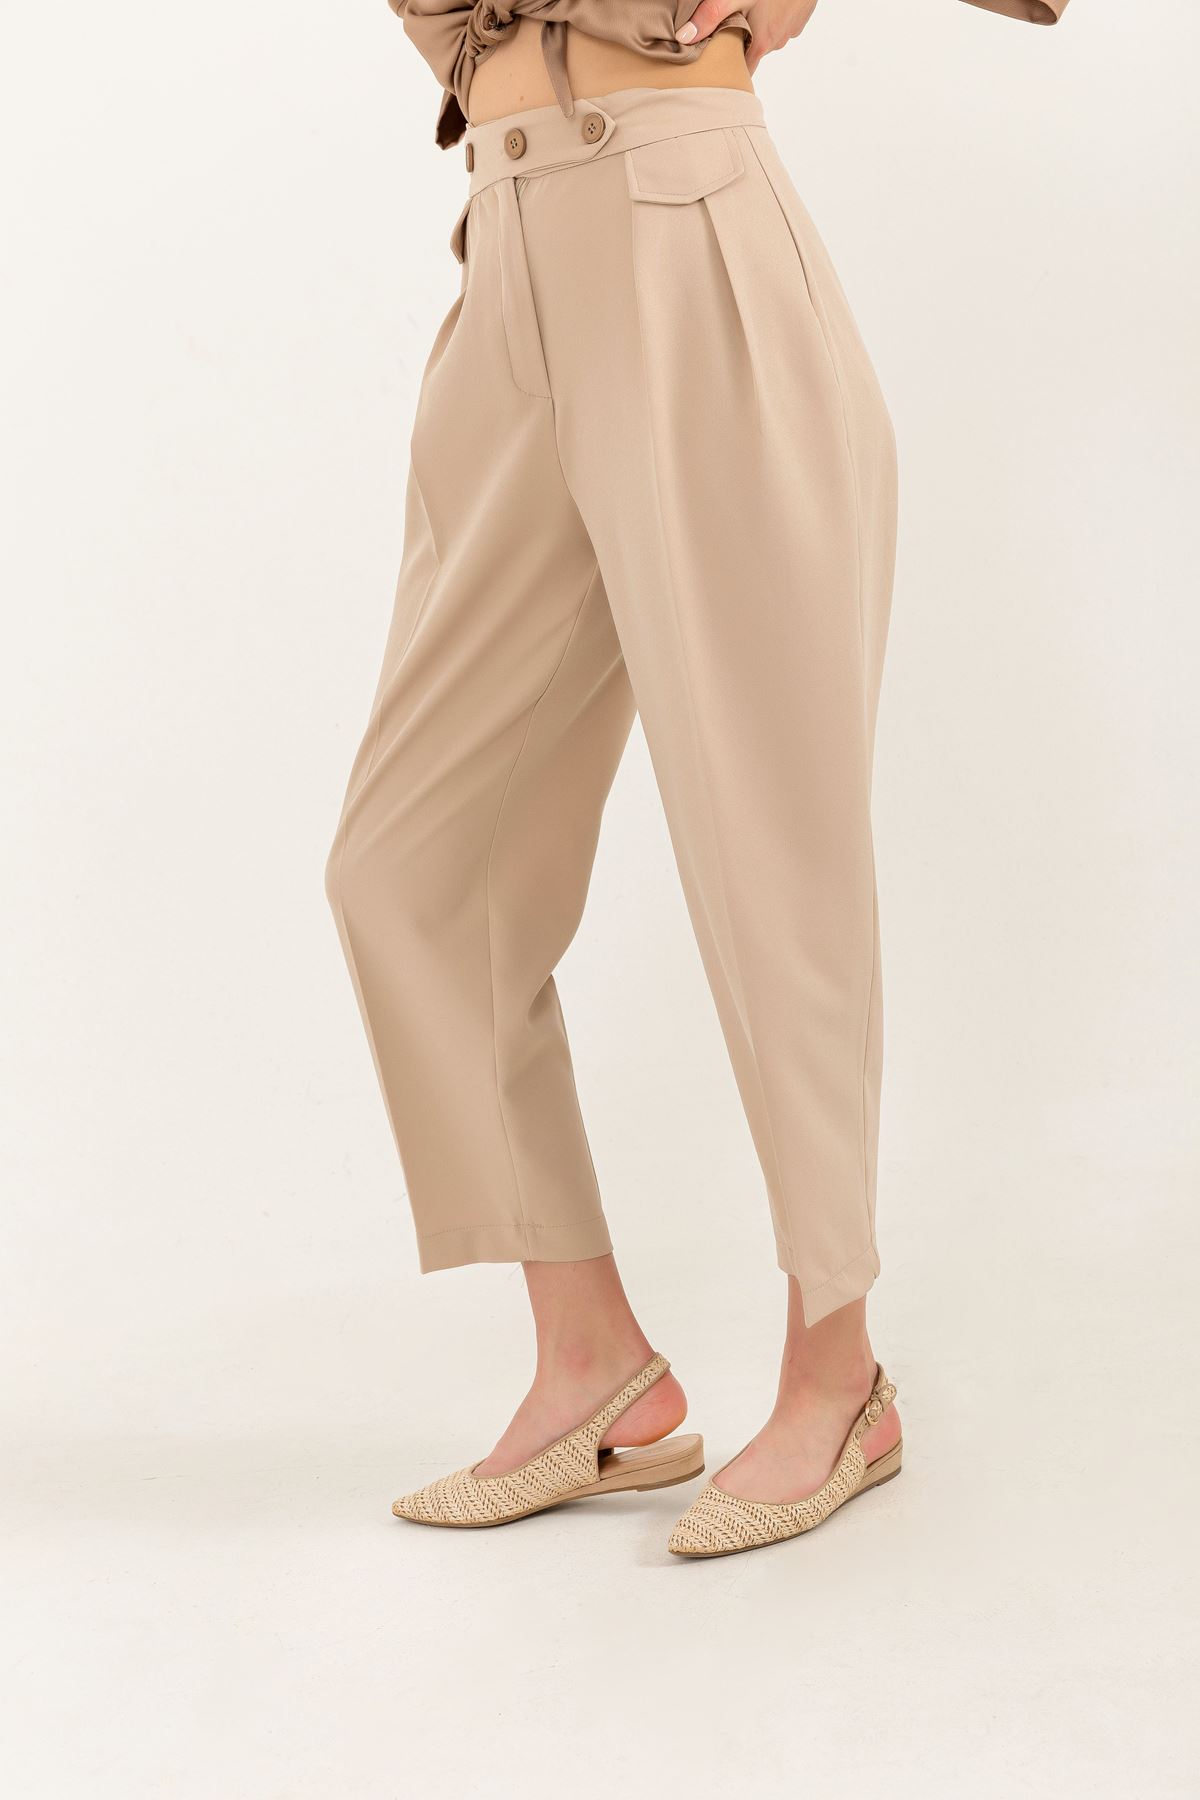 Atlas Fabric Ankle Length Carrot Style Women Trouser-Beige